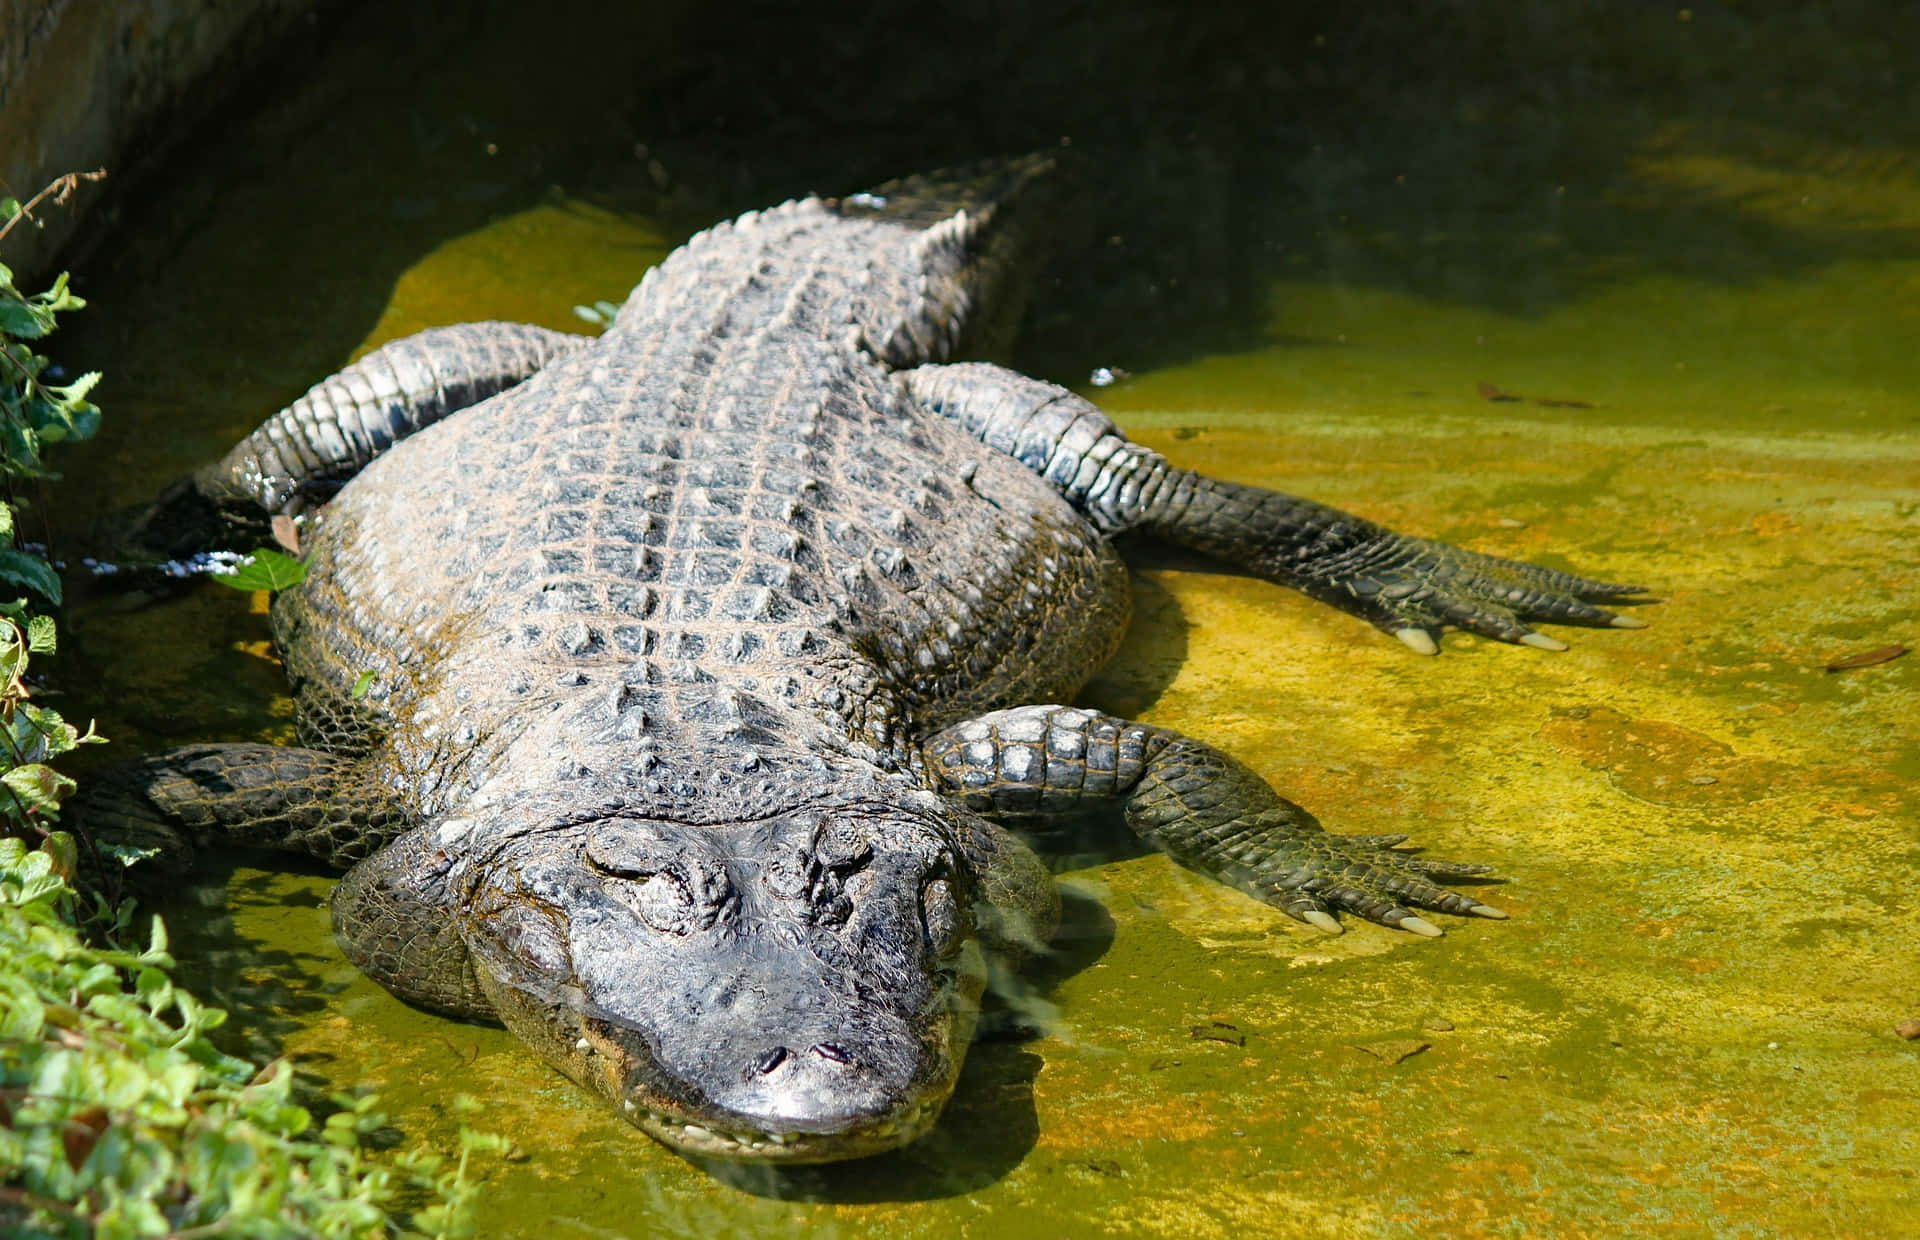 A Spectacular Alligator in its Natural Habitat